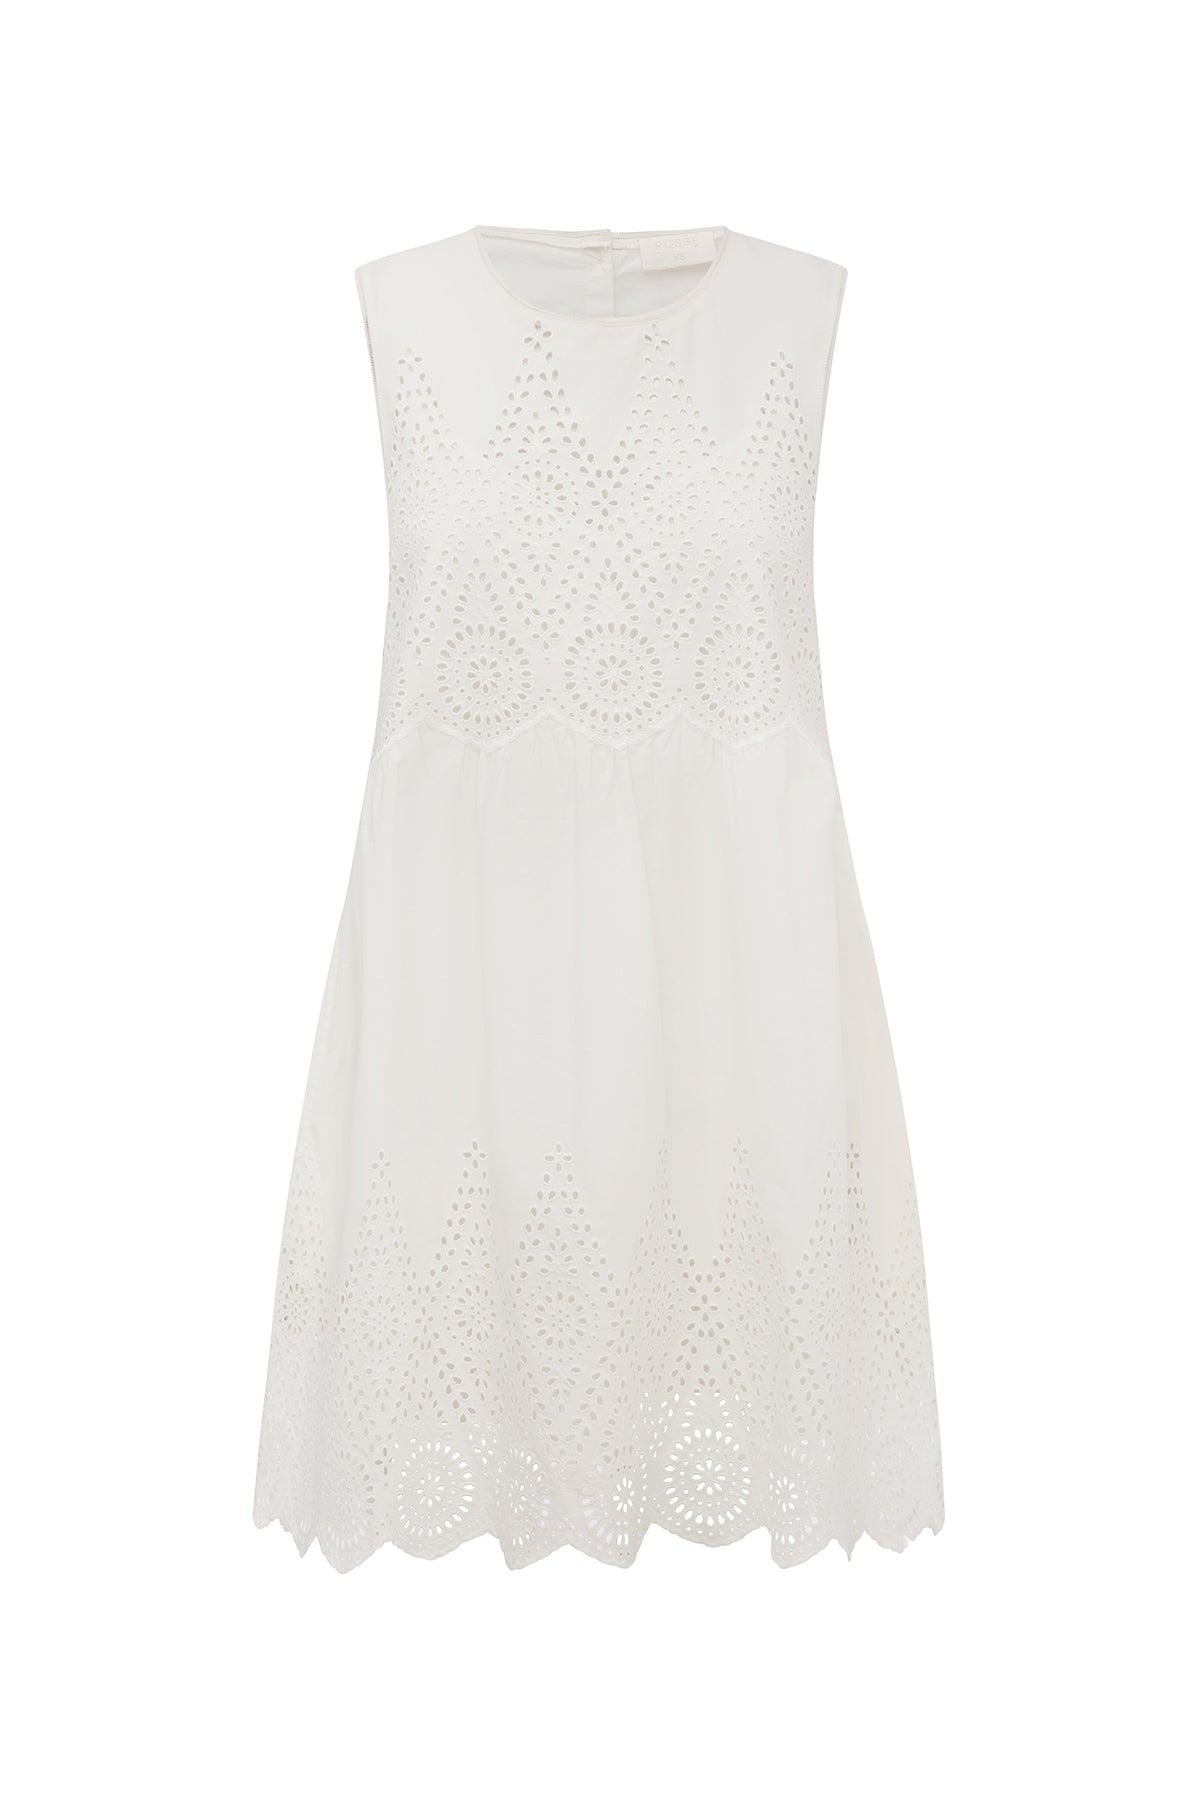 Posse Louisa Mini Dress - Vintage White